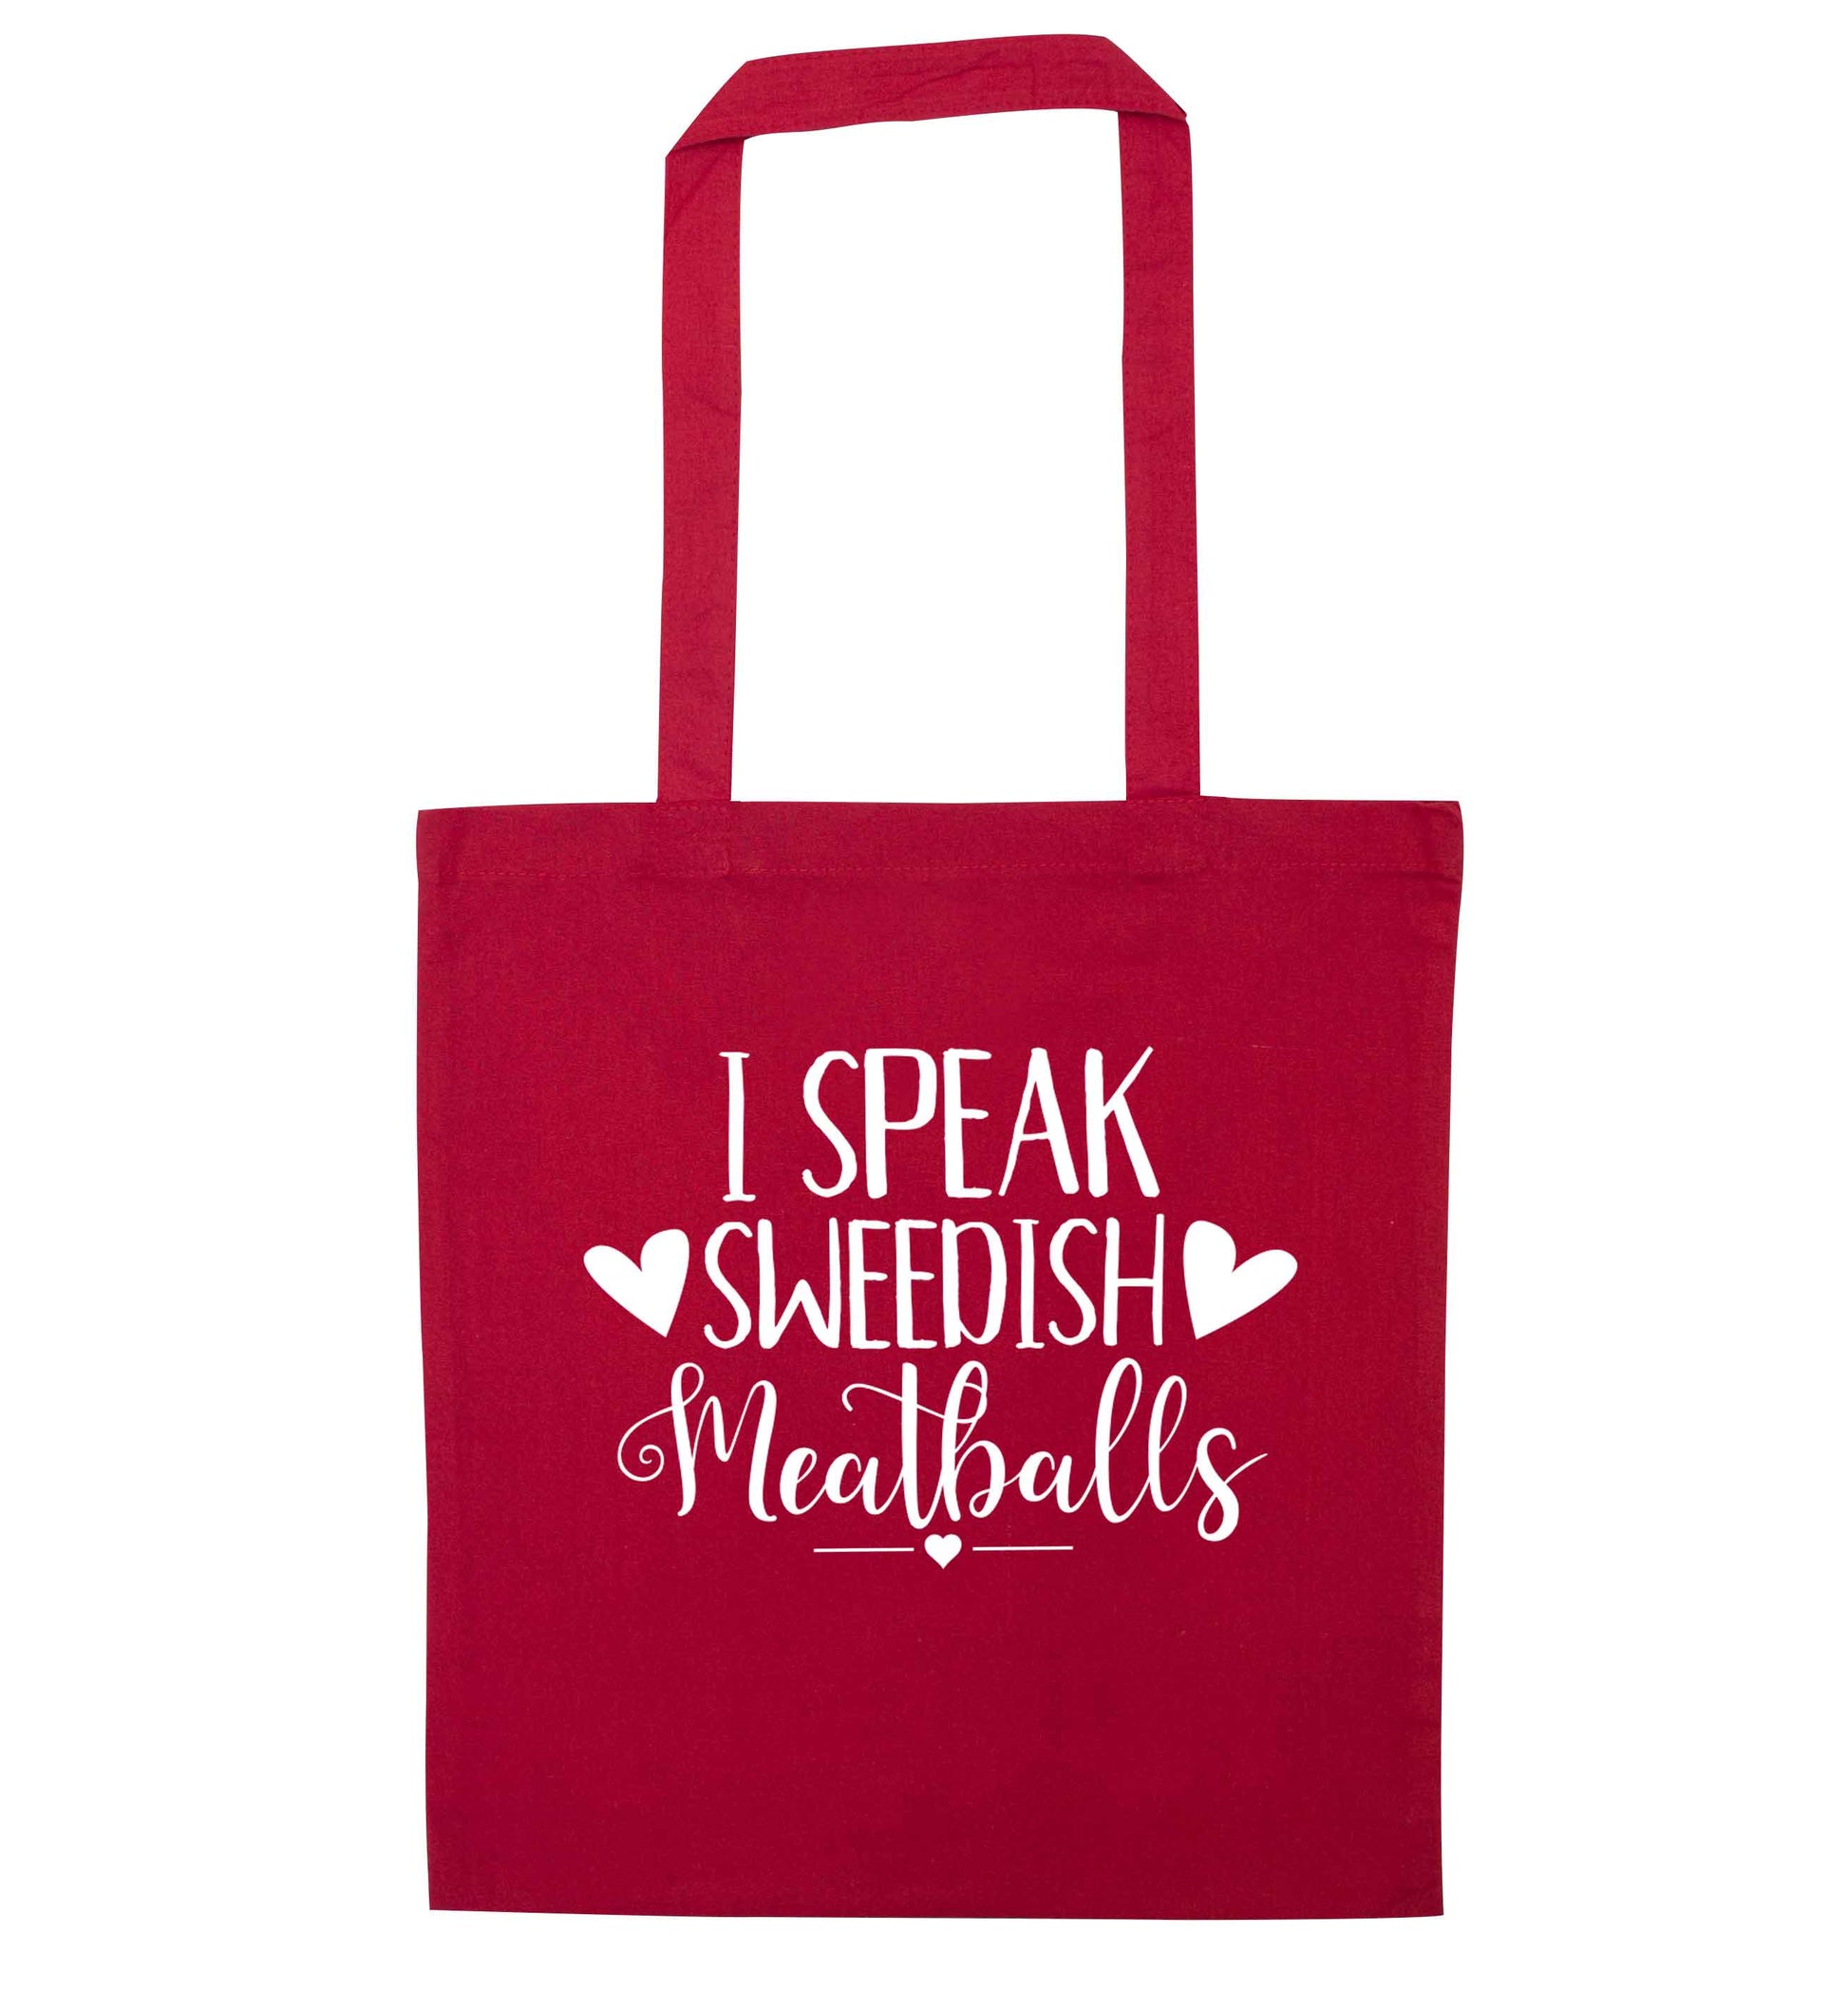 I speak sweedish...meatballs red tote bag